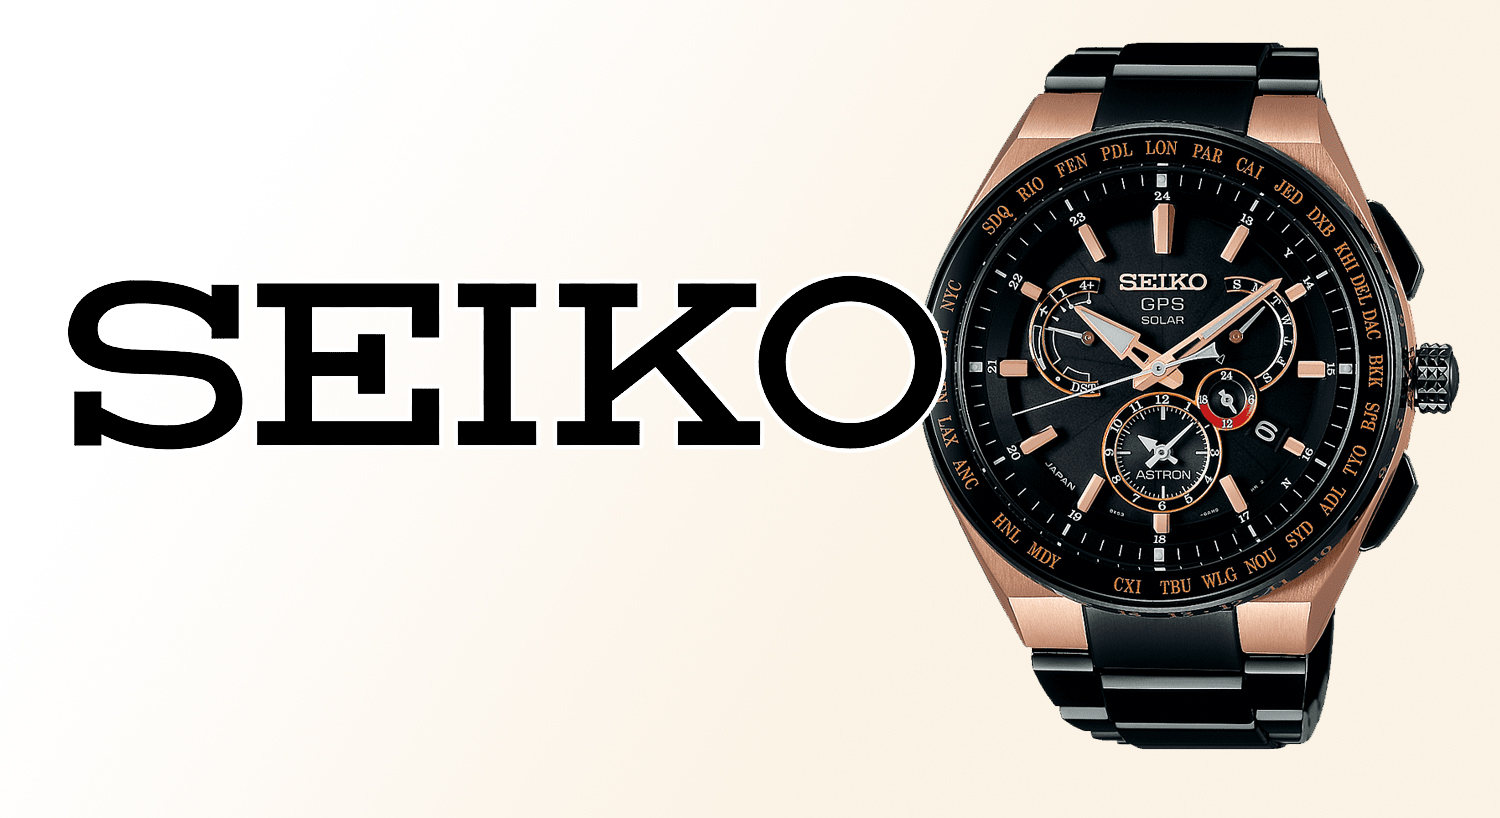 Seiko watch repair | Seiko clock repair shop, service in Boston